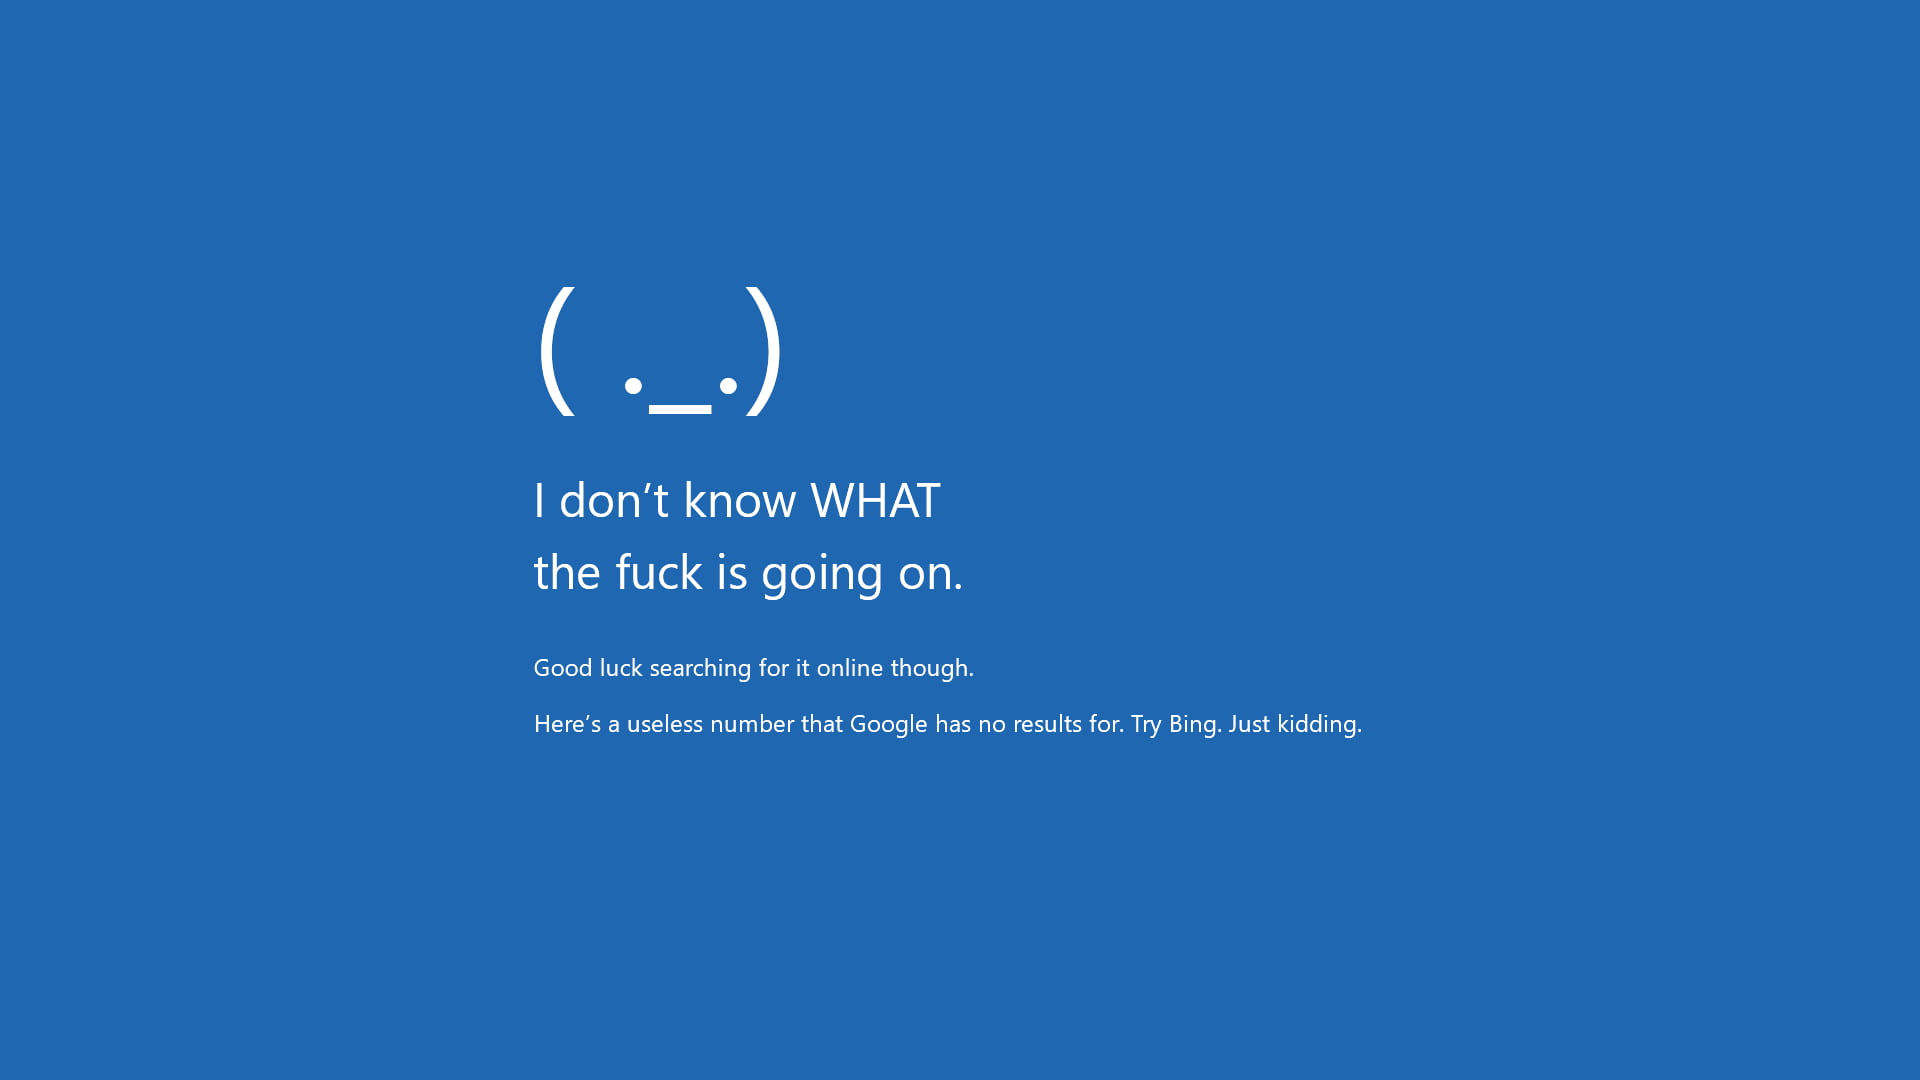 Windows 10, errors, Windows Errors, humor, Emoji, blue, Microsoft